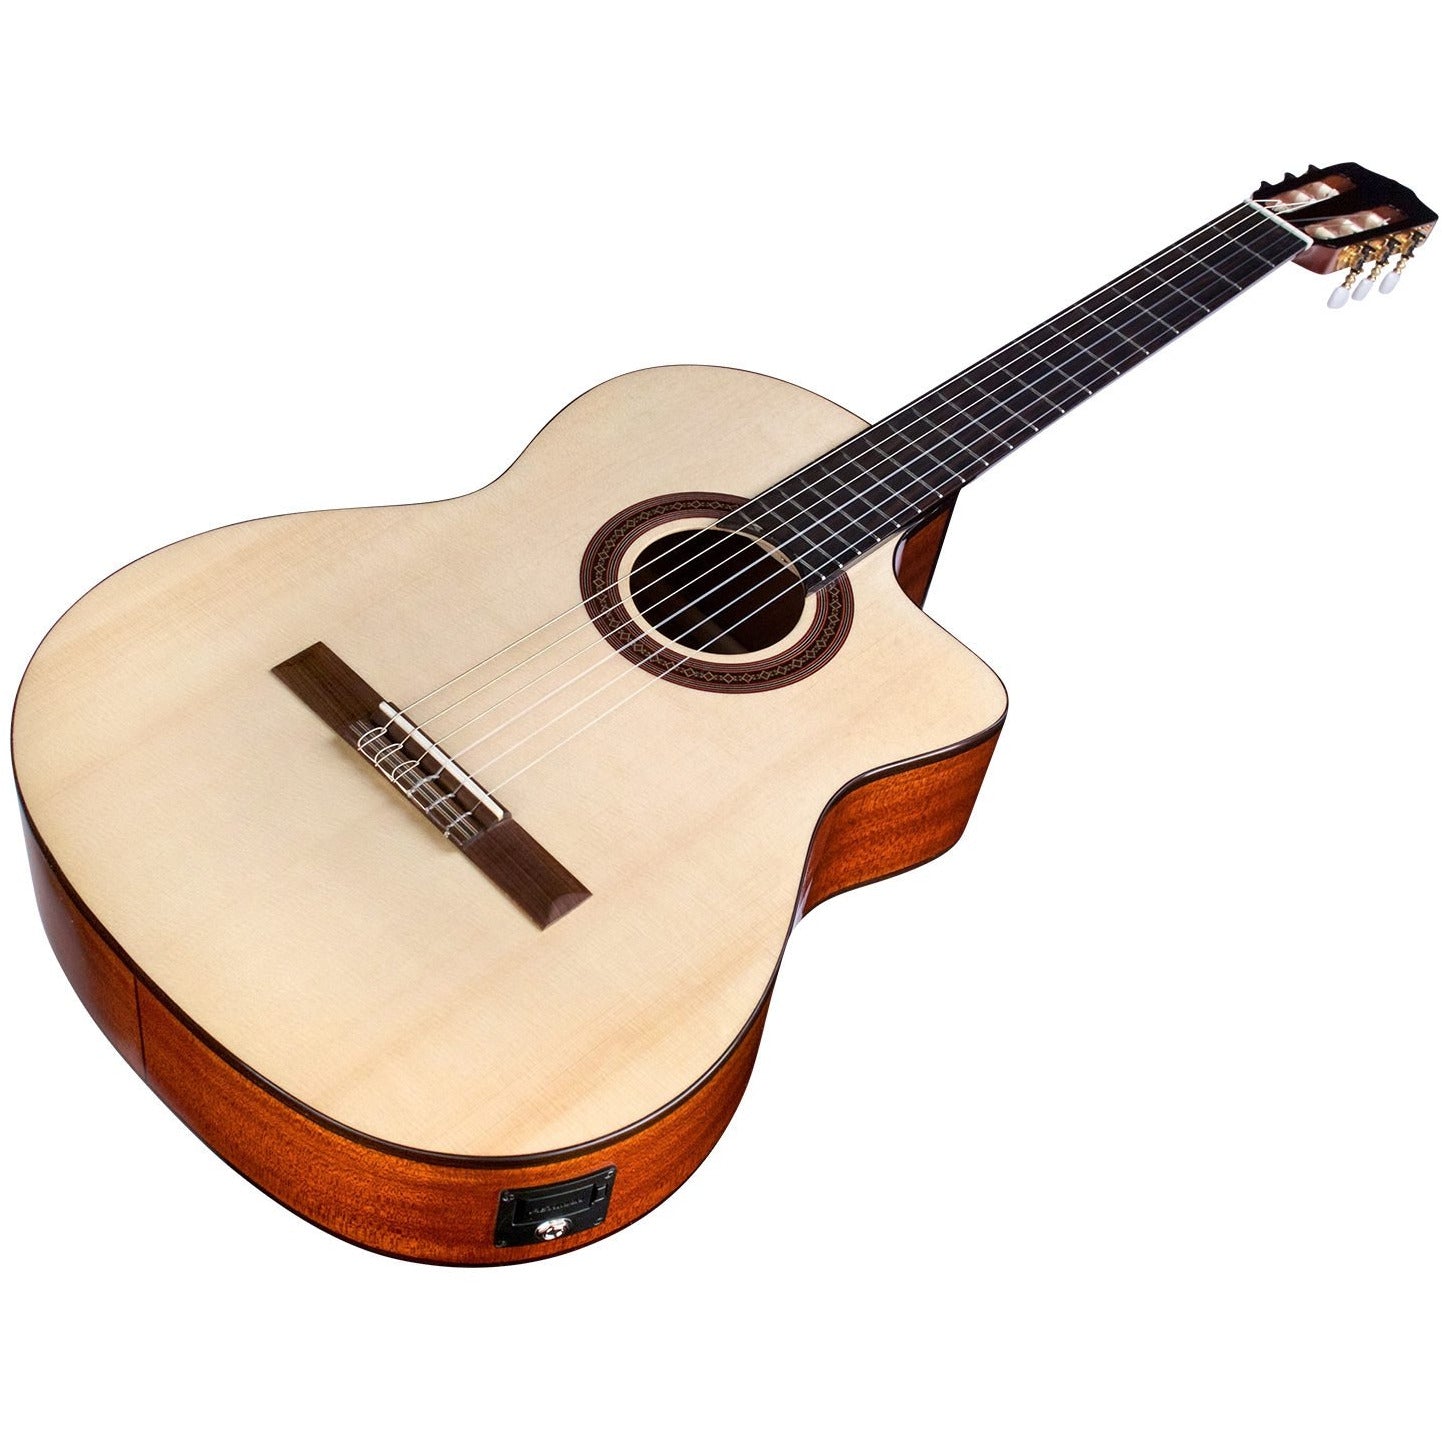 Image 3 of Cordoba C5-CE Spruce Top Classical Guitar - SKU# CORC5CESP : Product Type Classical & Flamenco Guitars : Elderly Instruments